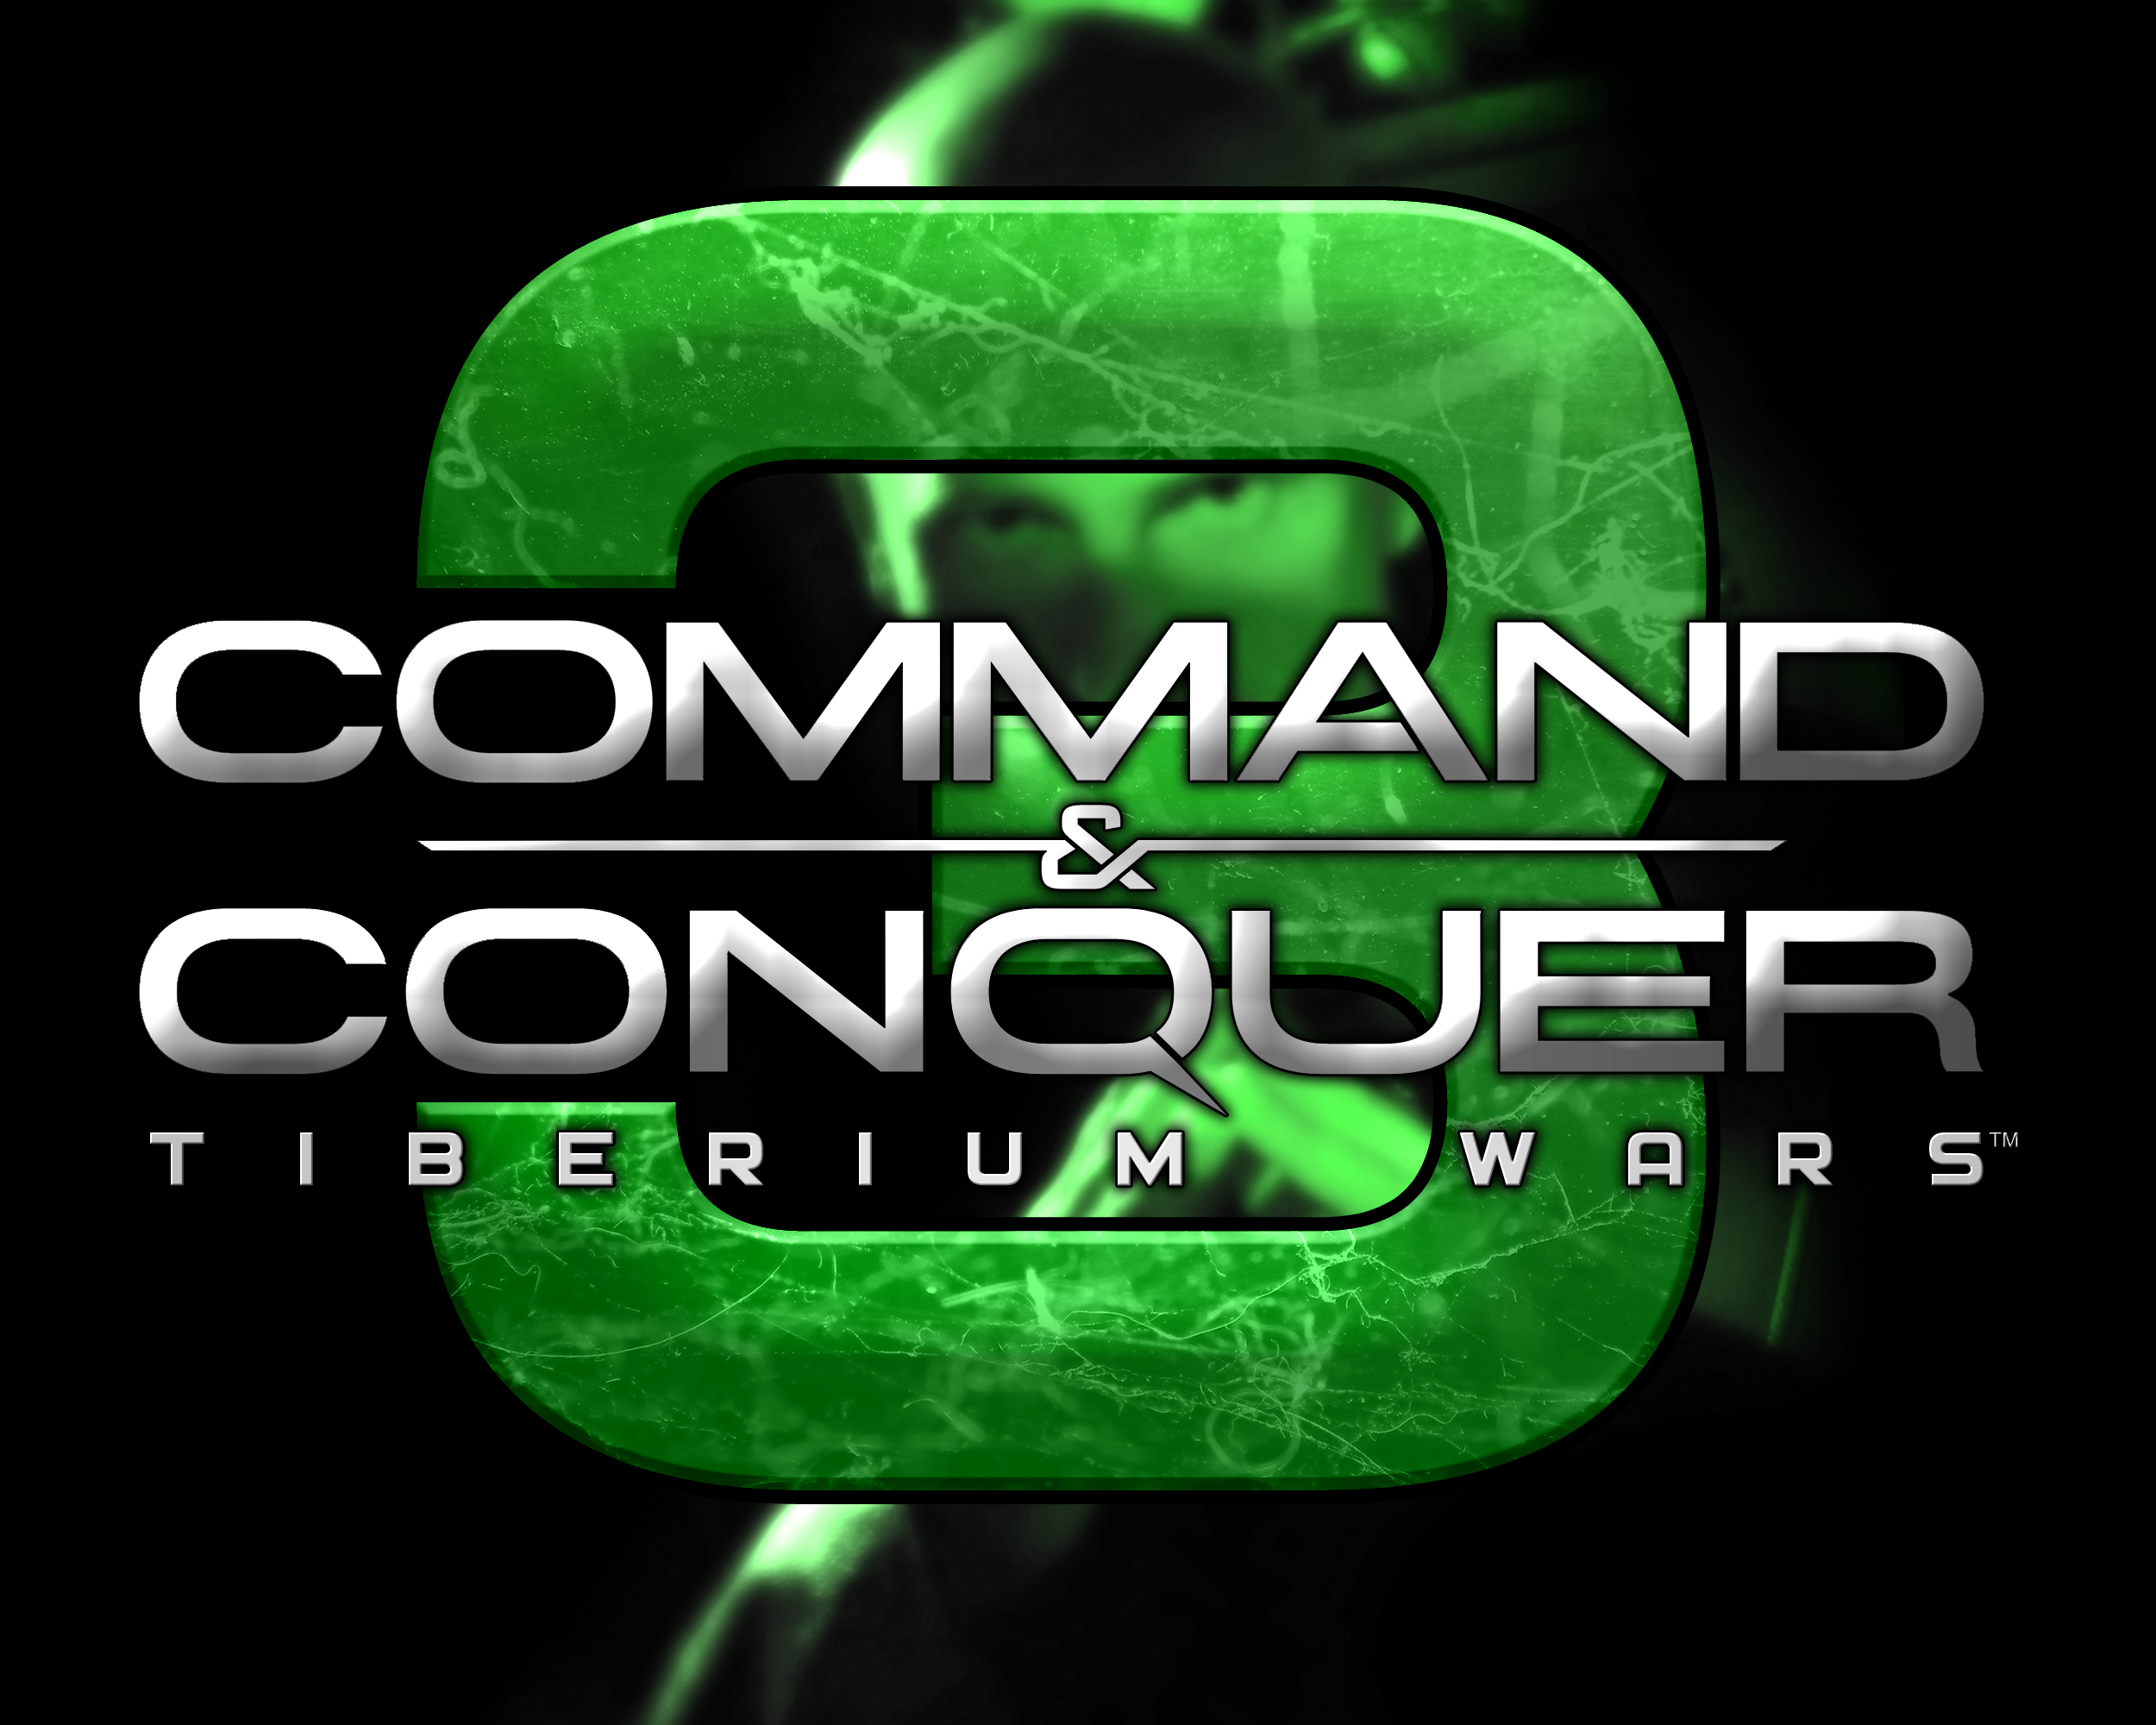 Command And Conquer 3 Tiberium Wars | НОД | Красная зона